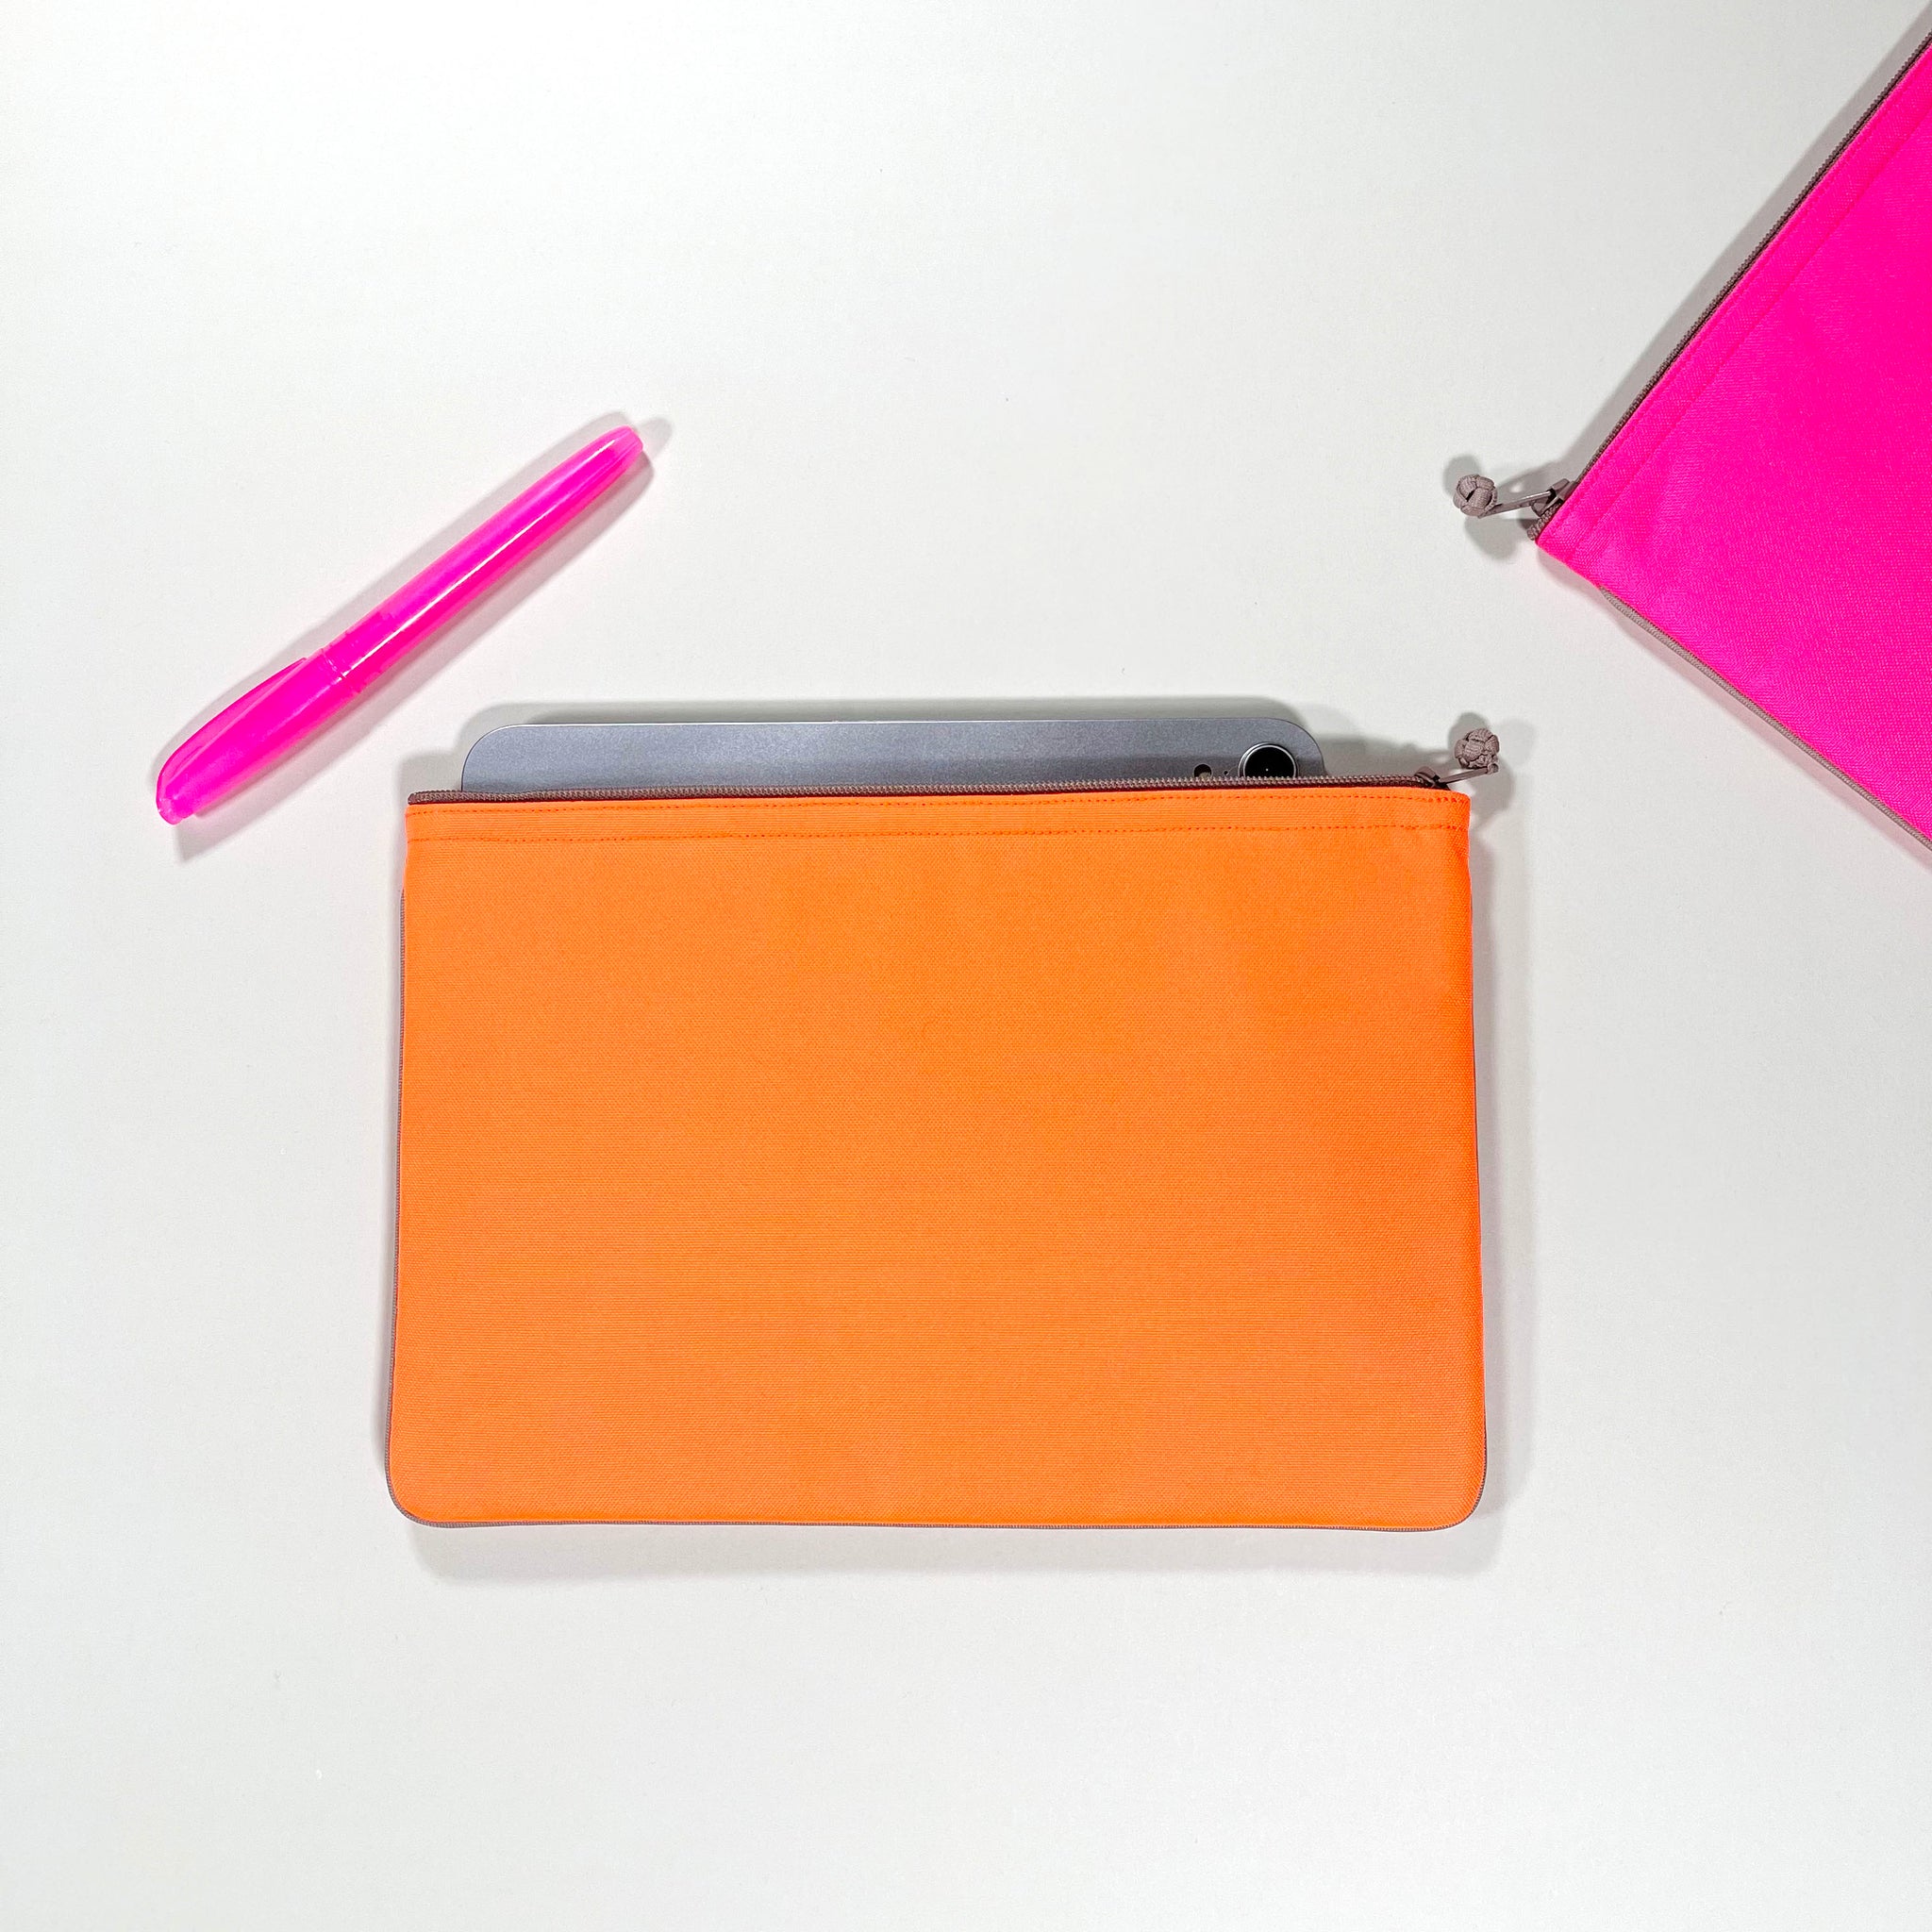 Jelly Handbag Purse Shoulder Bag Neon Orange Gold Accents Summer Ready  Mango | eBay